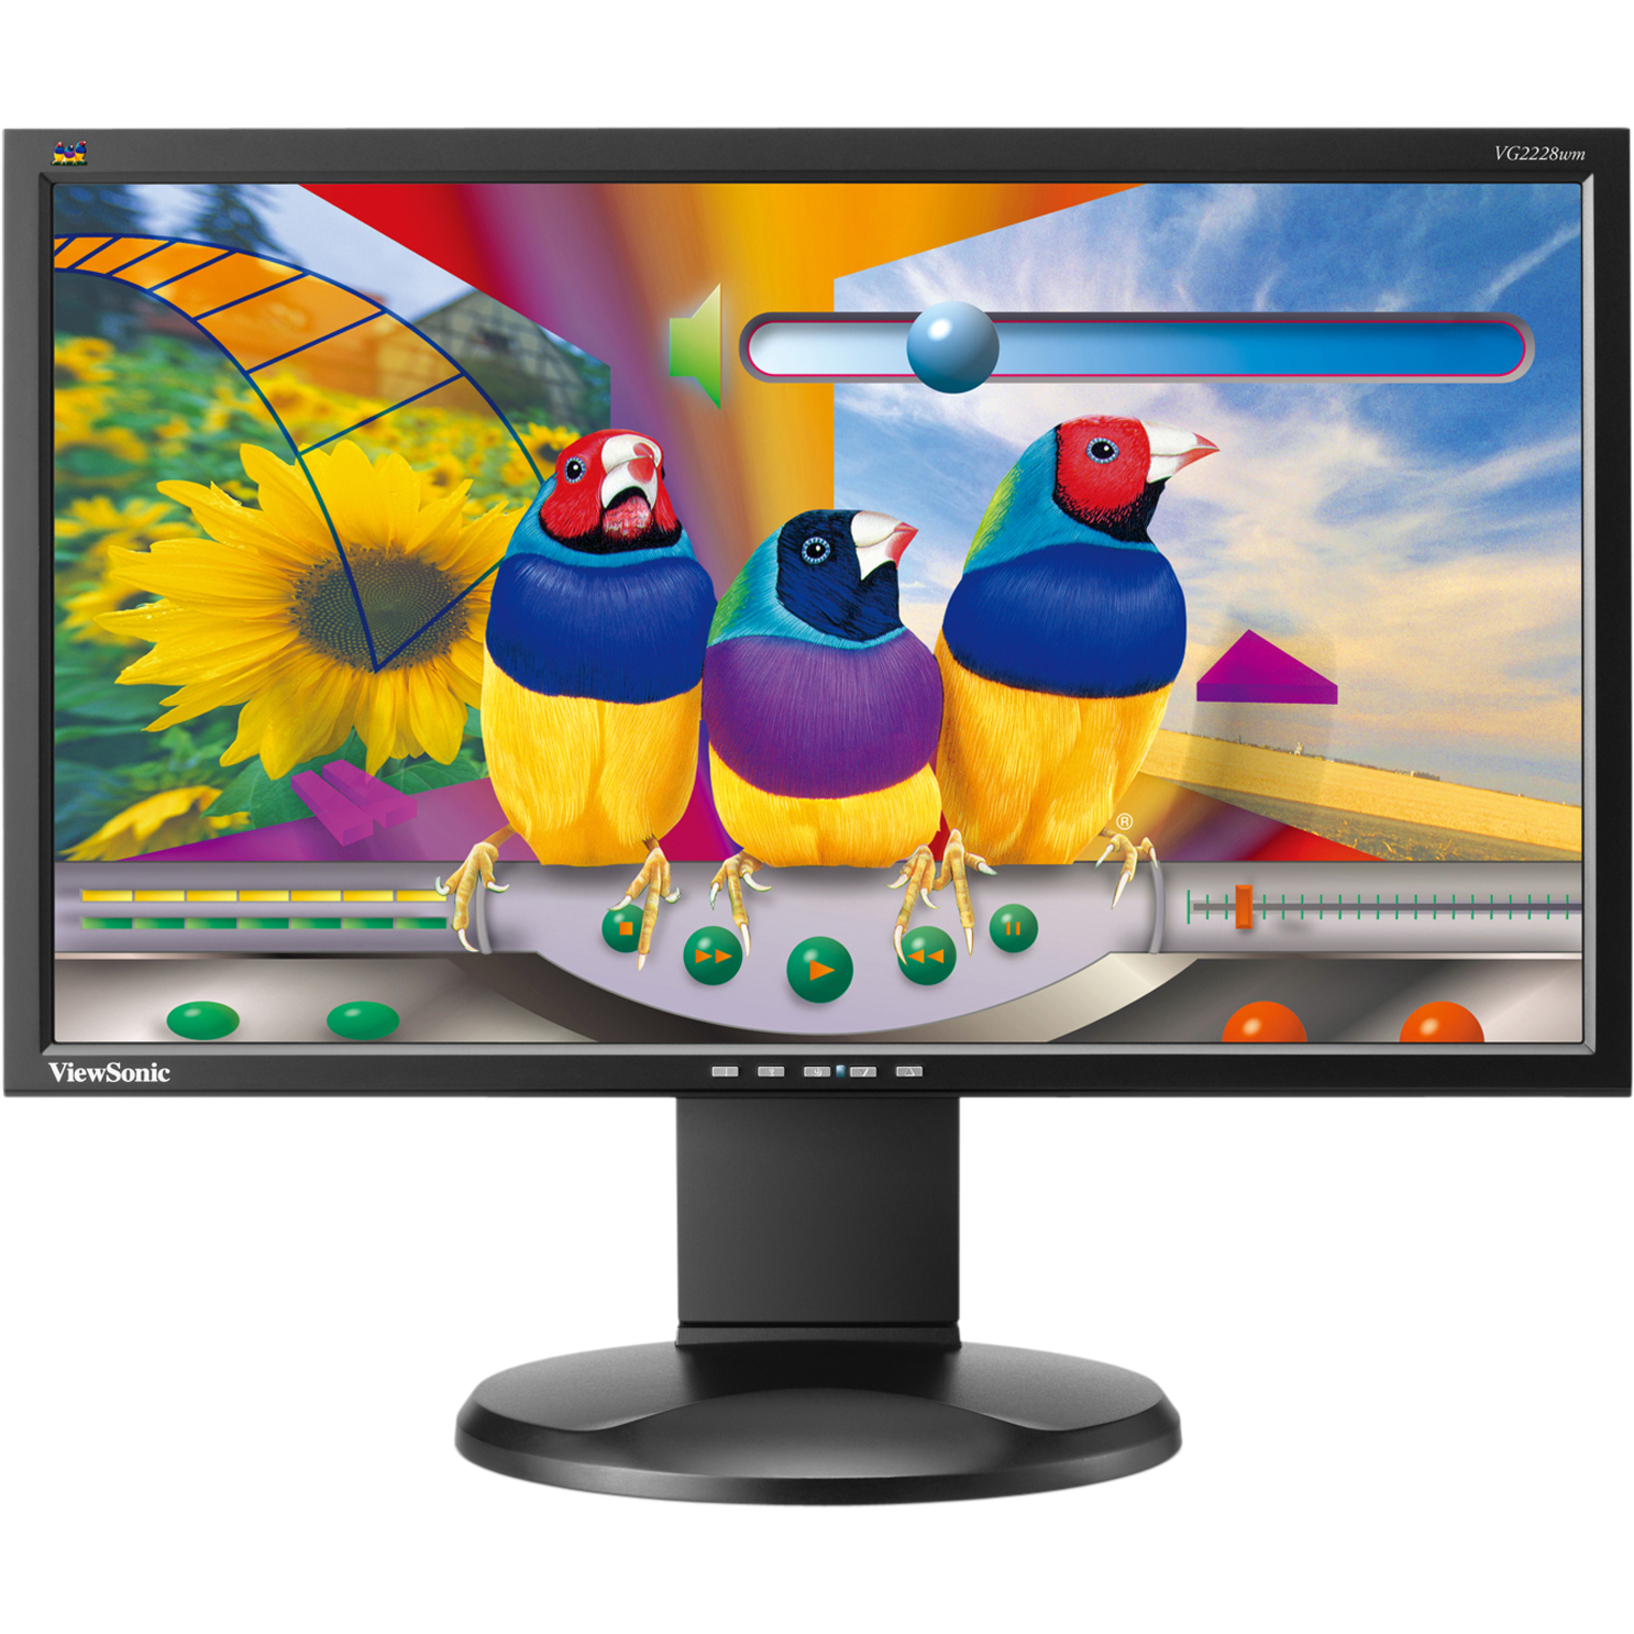 ViewSonic VG2228wm-LED 22" Class Full HD LCD Monitor, 16:9 - image 1 of 5